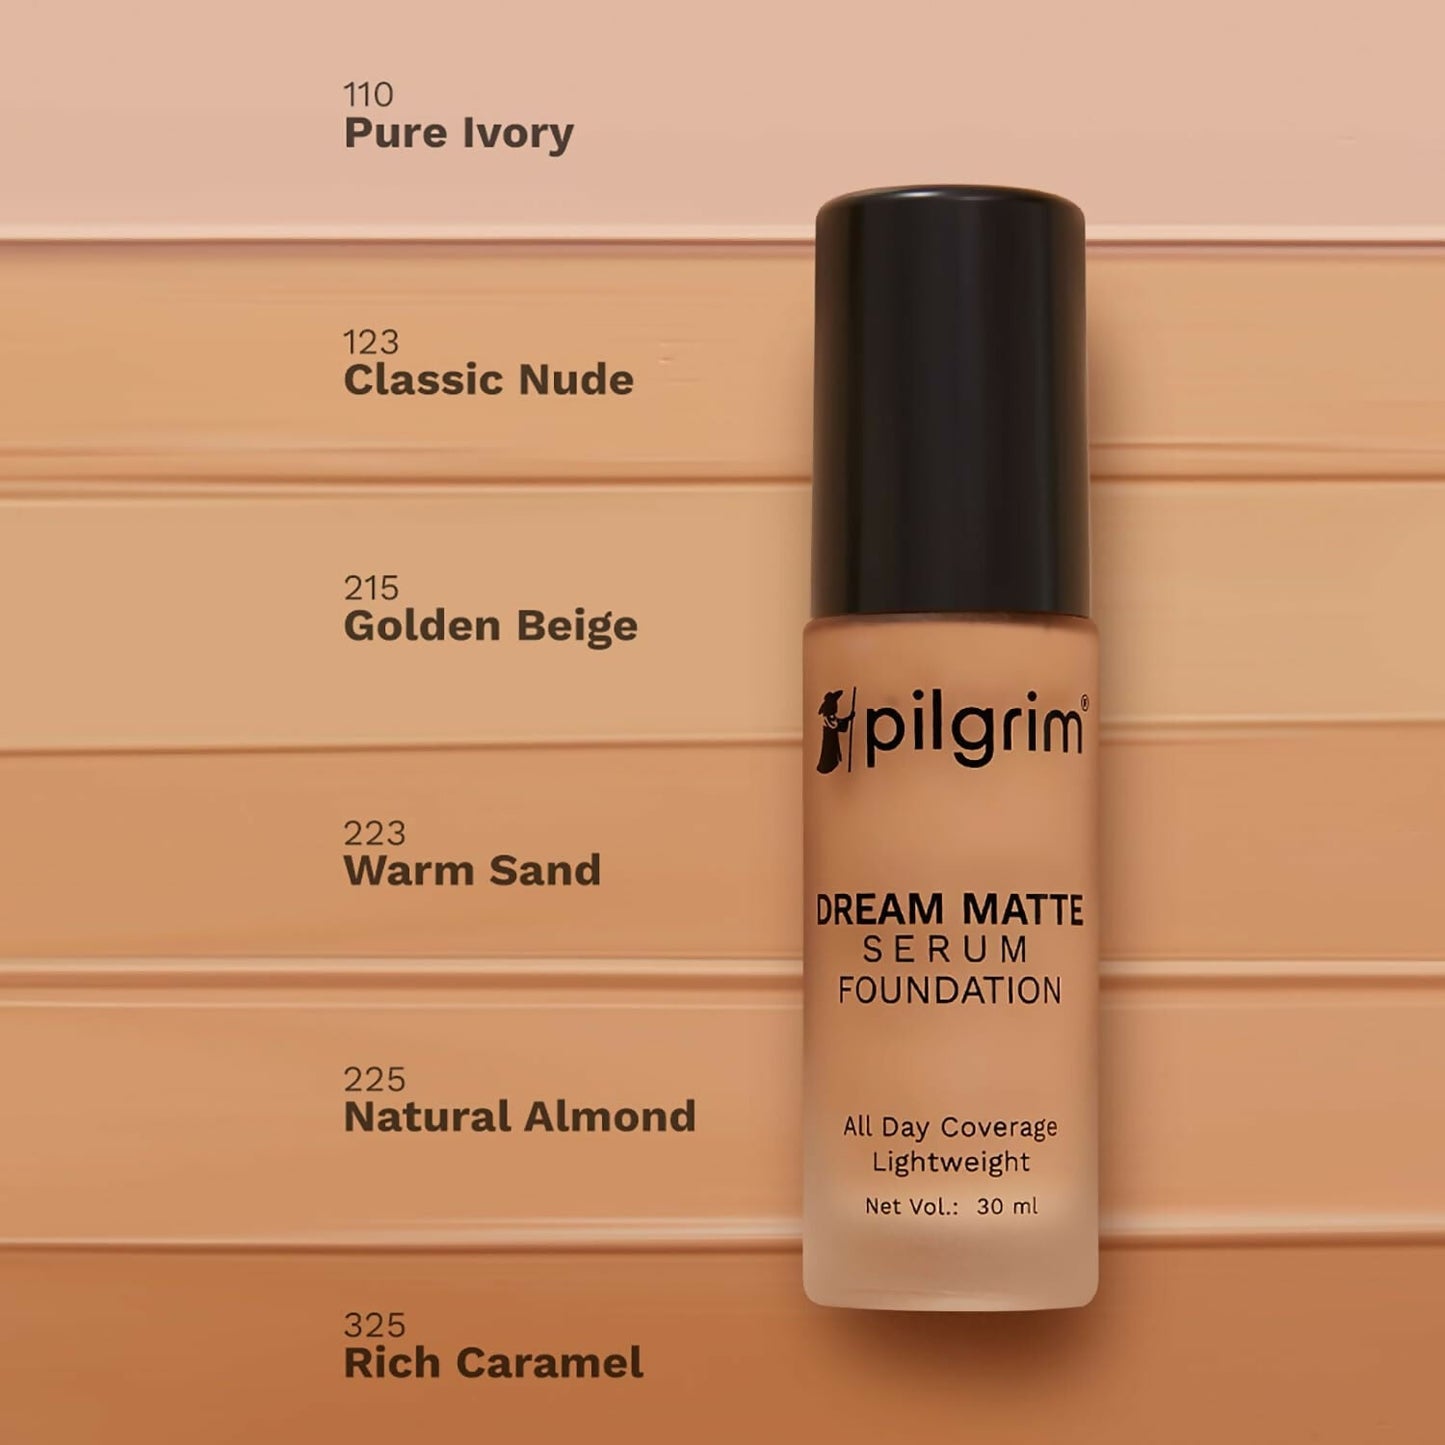 Pilgrim Dream Matte Serum Foundation With Matte & Poreless All Day Coverage Lightweight - Pure Ivory